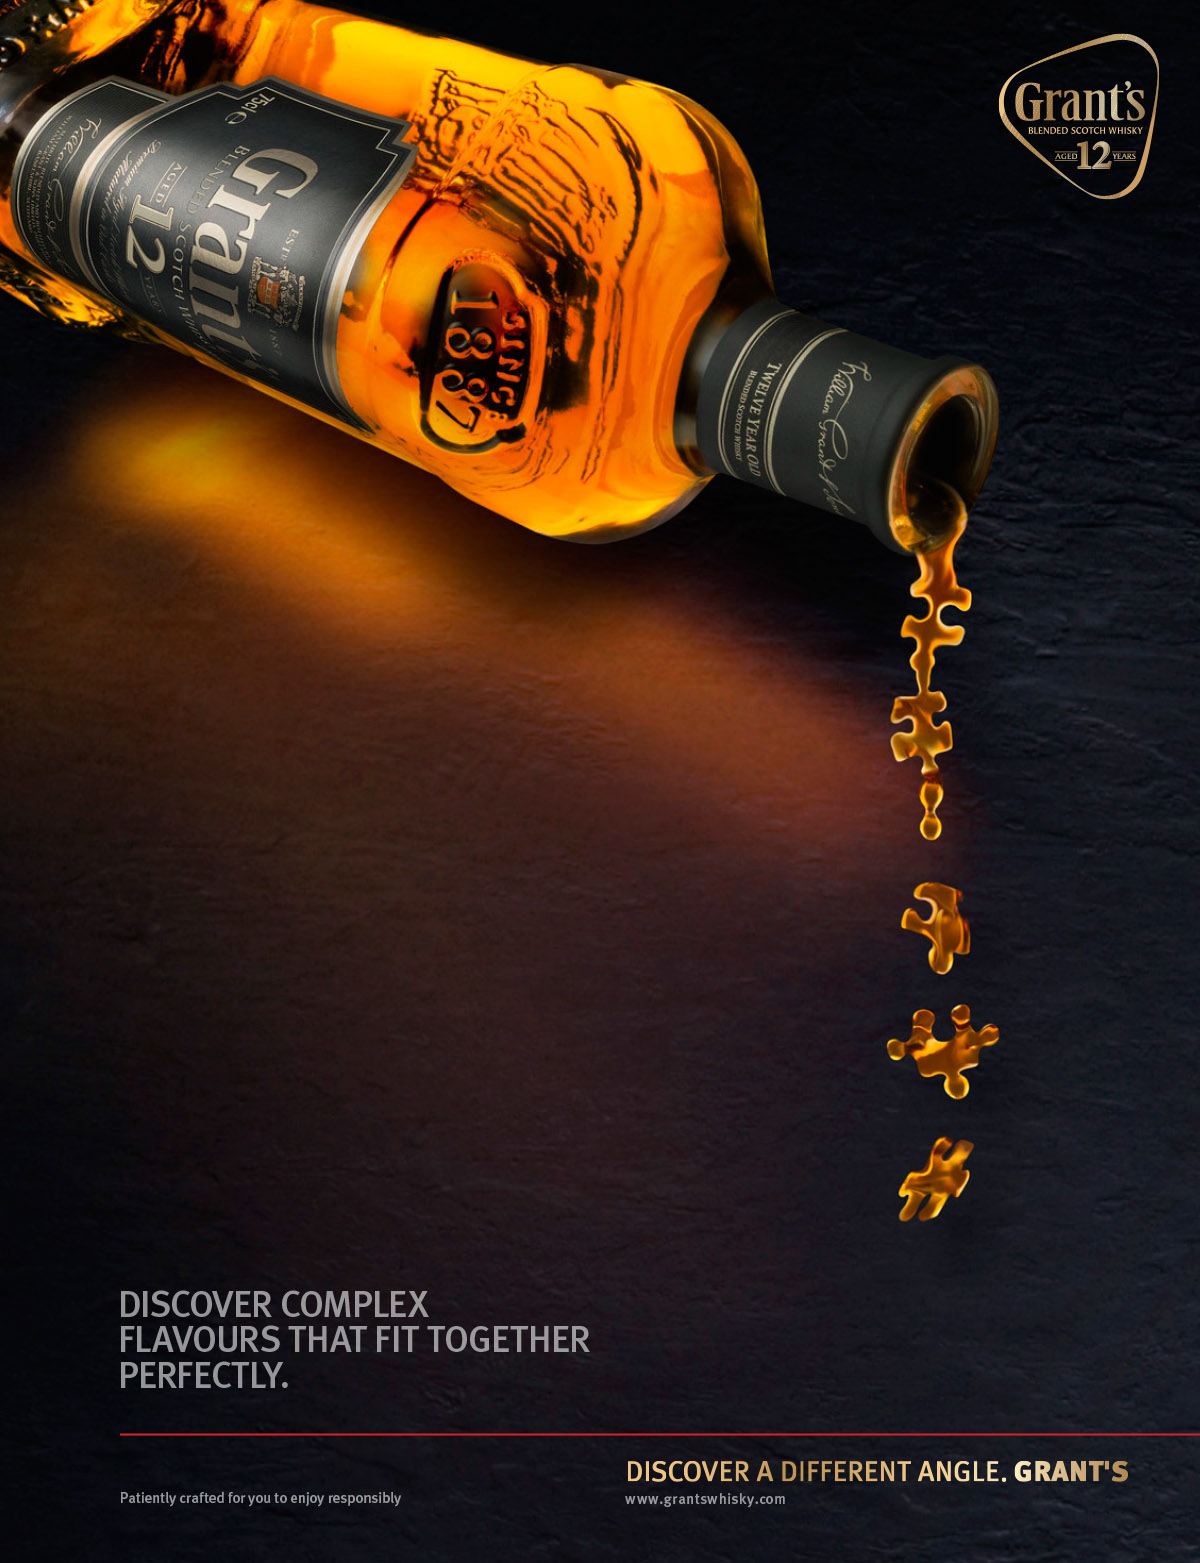 Adobe Portfolio Grants 12 whisky luke white grants whisky  whisky ads  jonathan Knowles TAYLOR JAMES premium drinks liquids